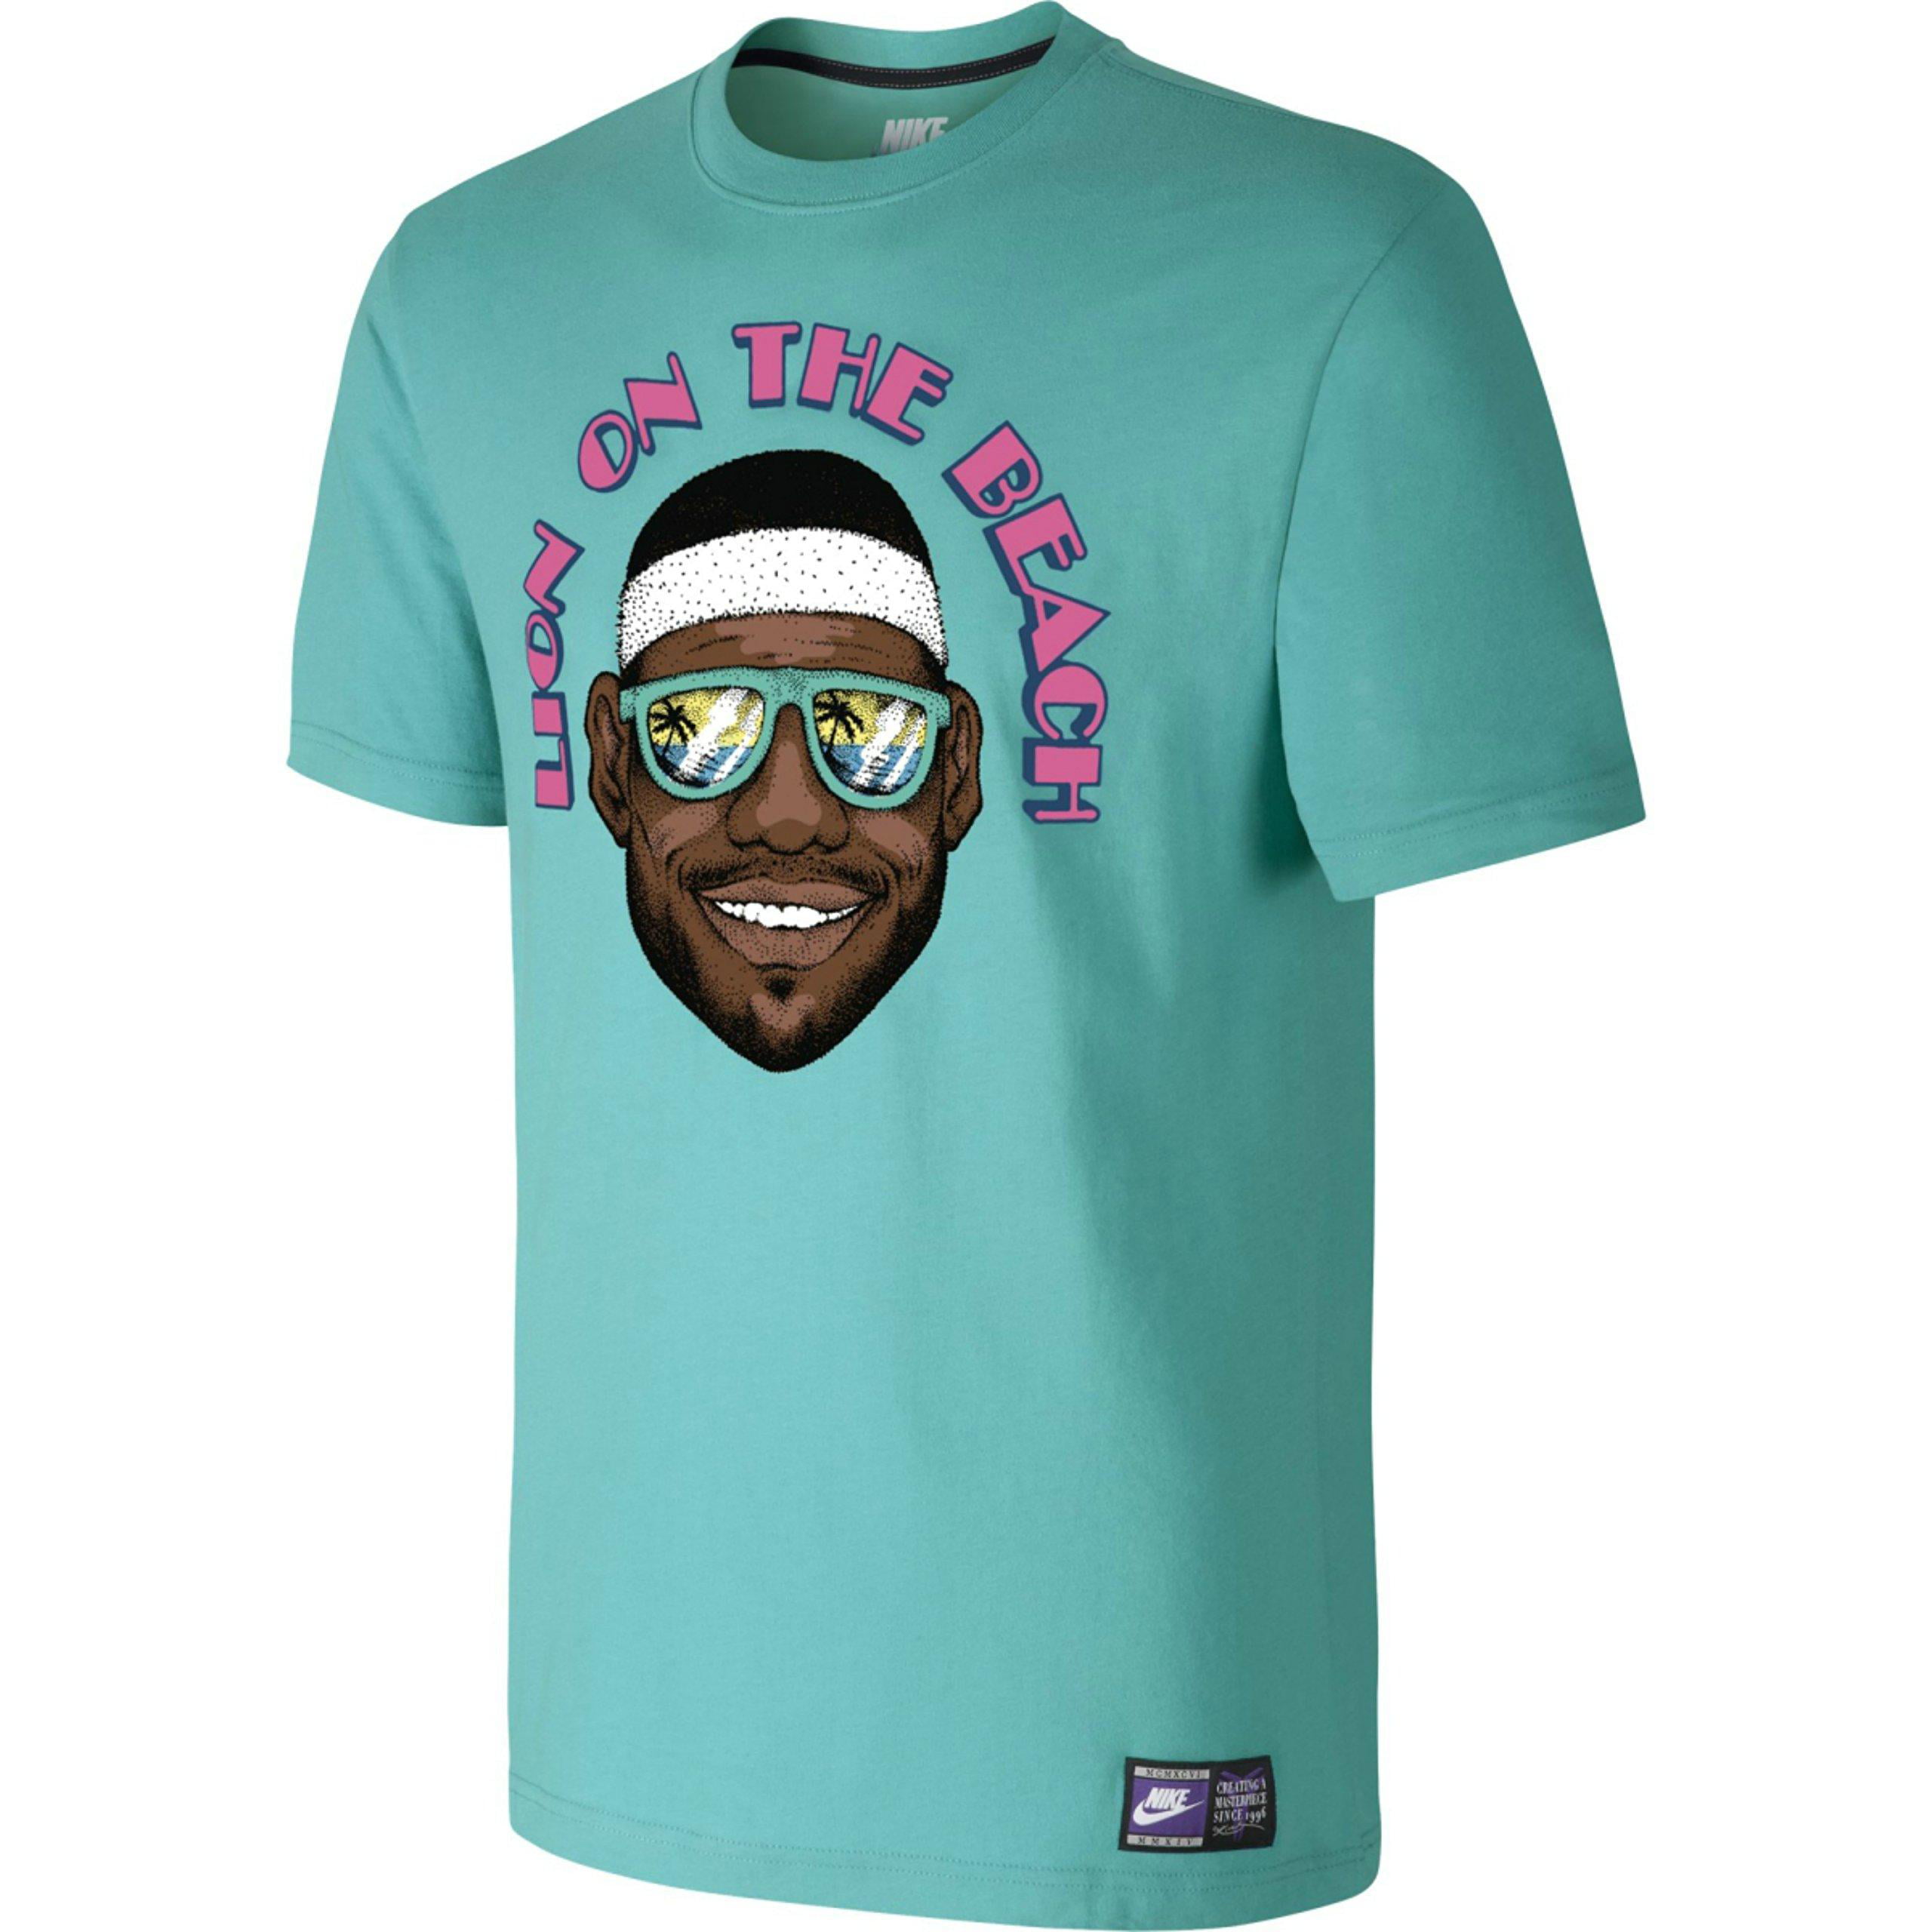 Nike Lebron Lion On Beach James top tee Shirt -